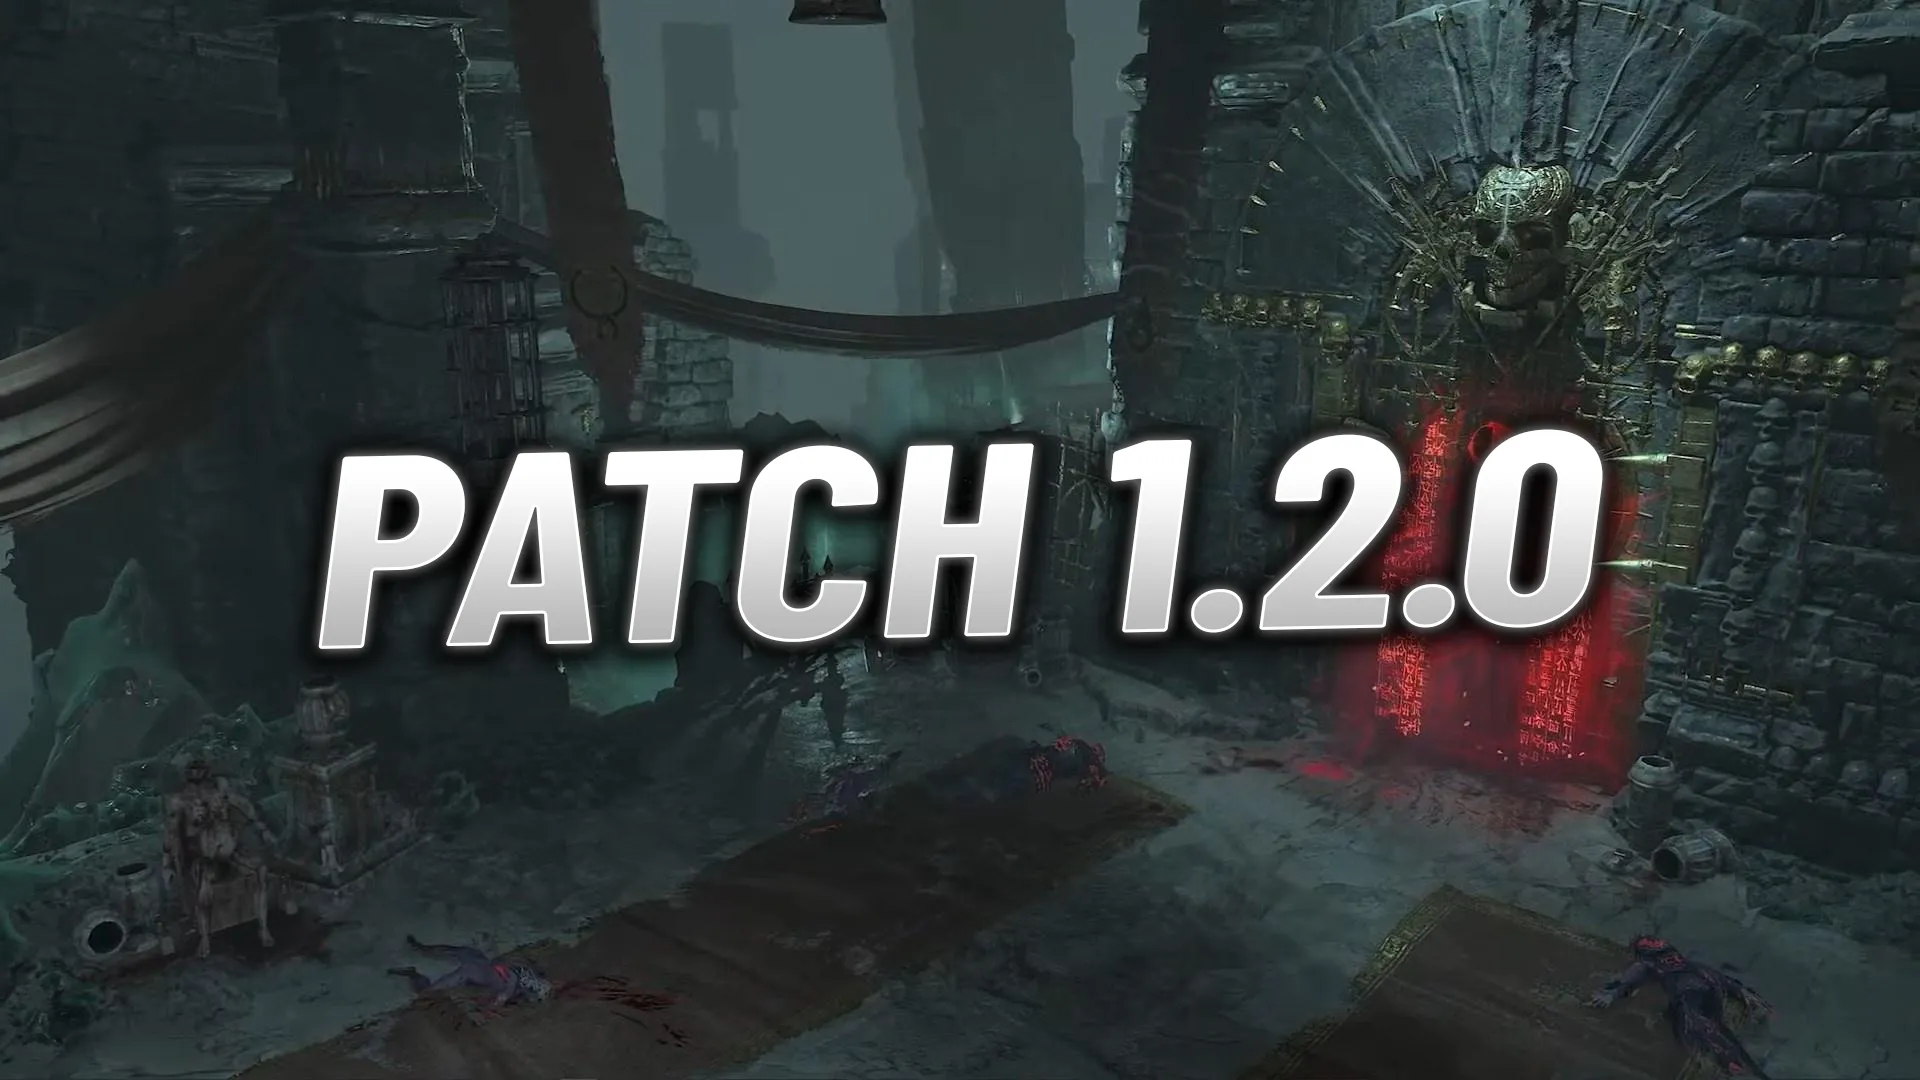 Diablo 4 Patch Notes: Patch 1.2.0 - Class Changes, New Aspects